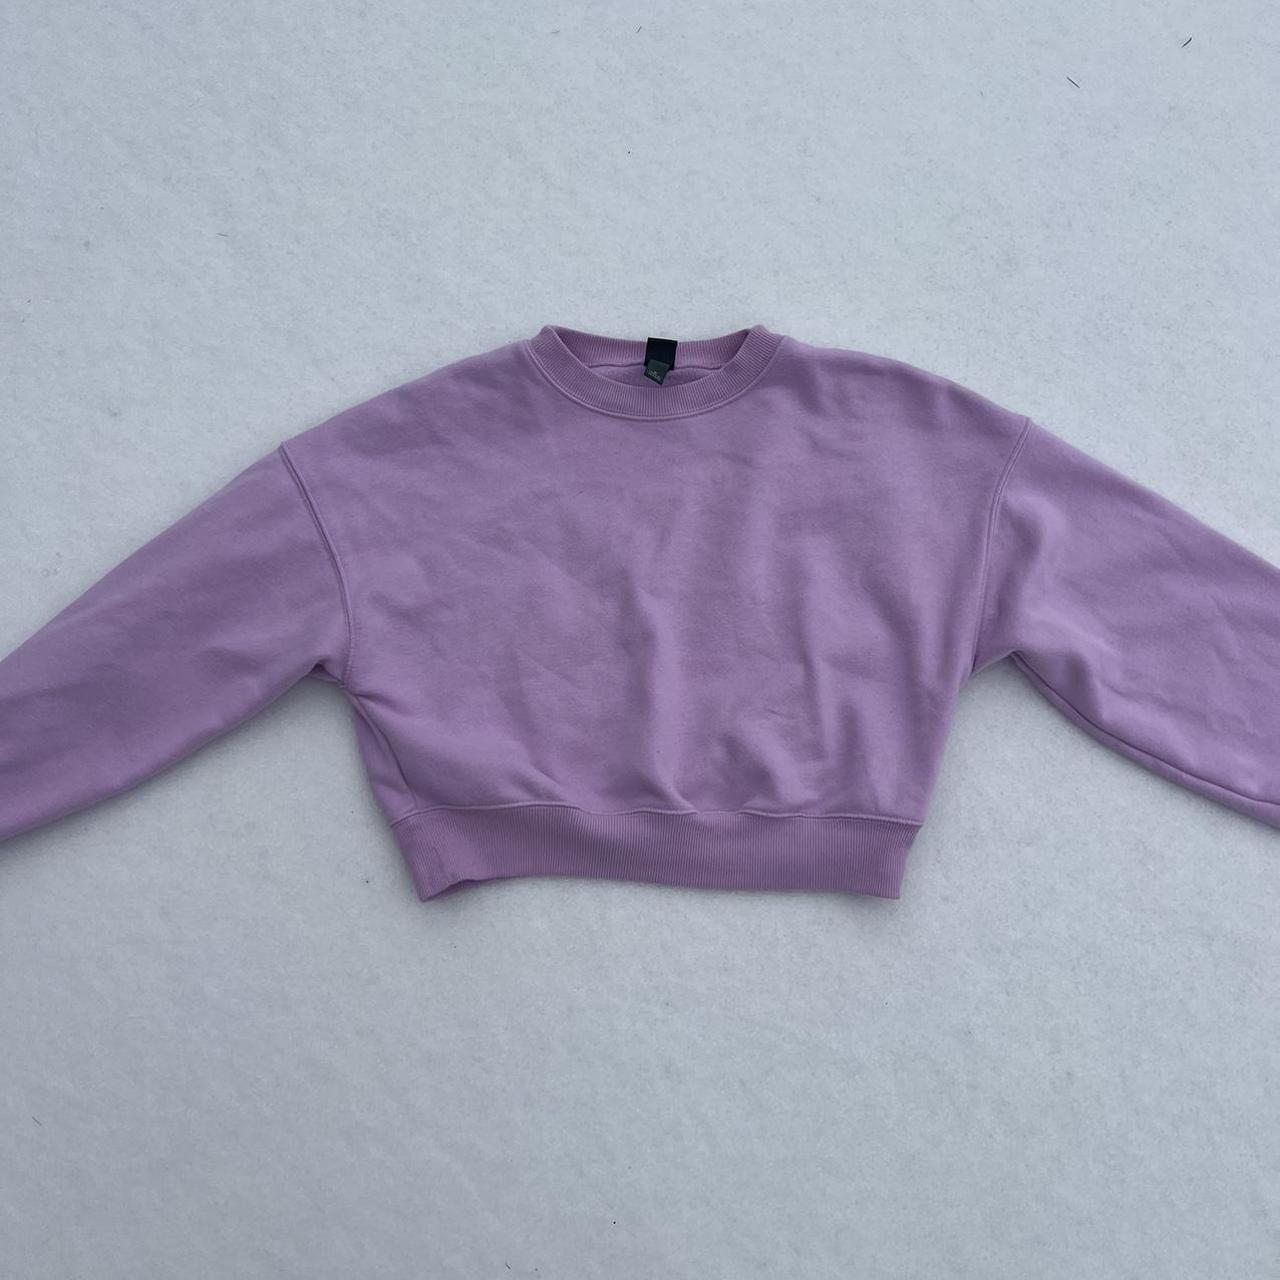 Wild Fable Women's Pink and Purple Sweatshirt